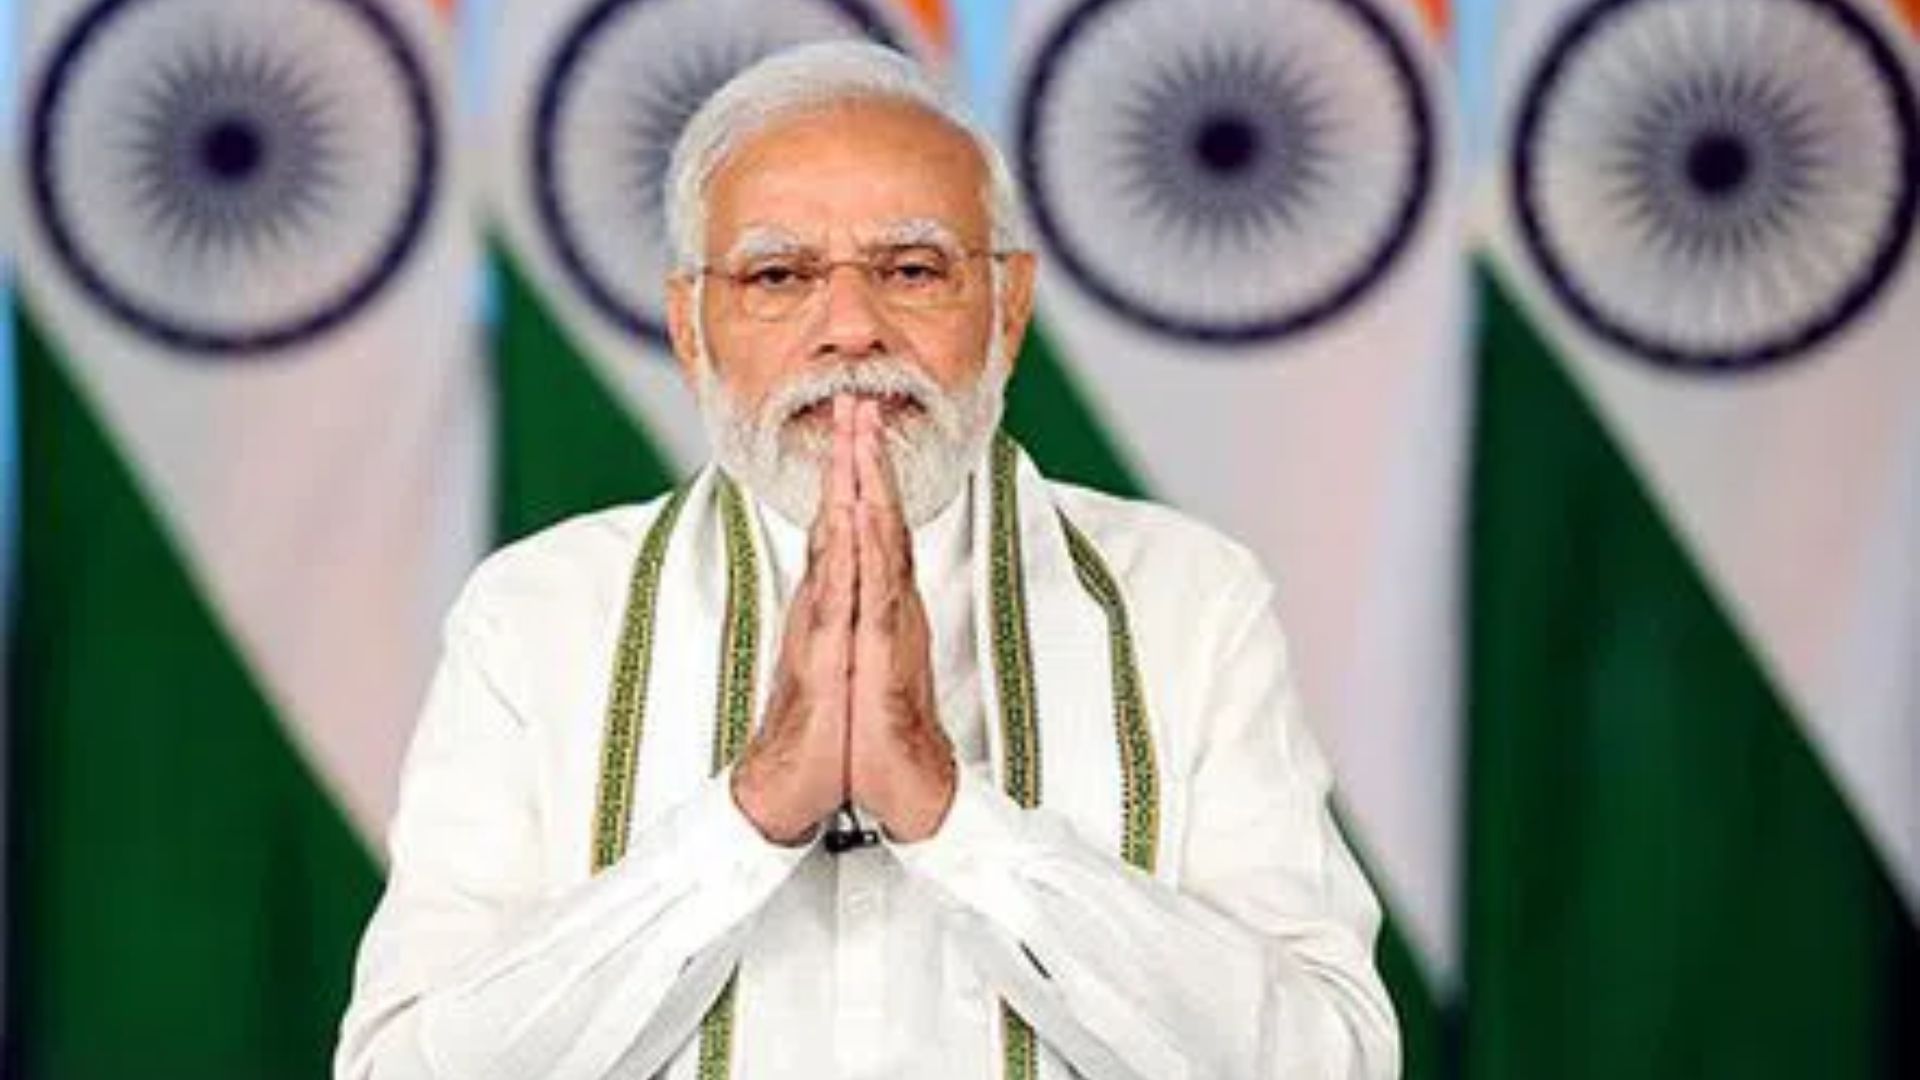 PM Narendra Modi to visit multiple temples in Tamil Nadu on 20-21 January